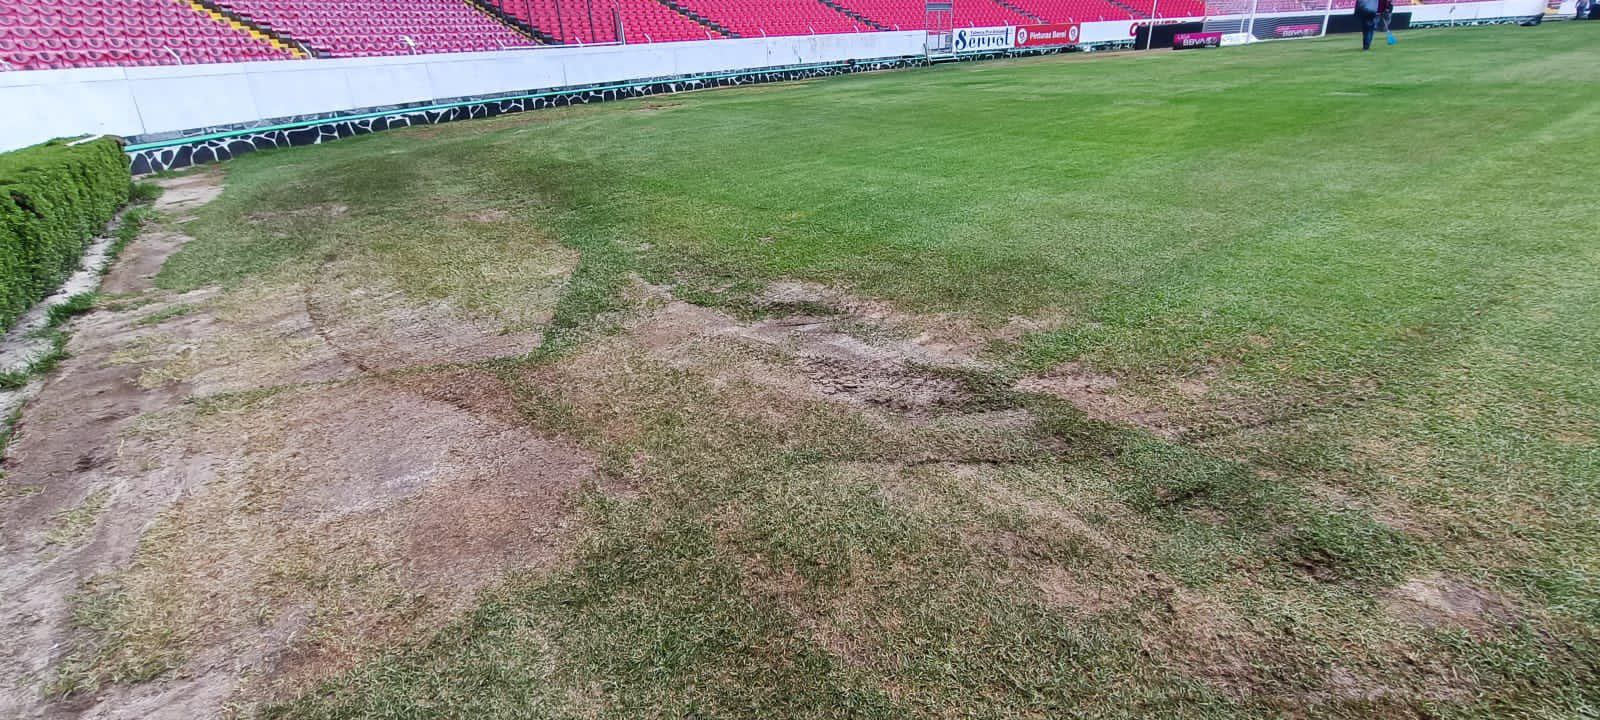 This is what the field of the Jalisco Stadium looks like a few hours after Atlas vs América Femenil (Twitter/ @Jesusjdrc)